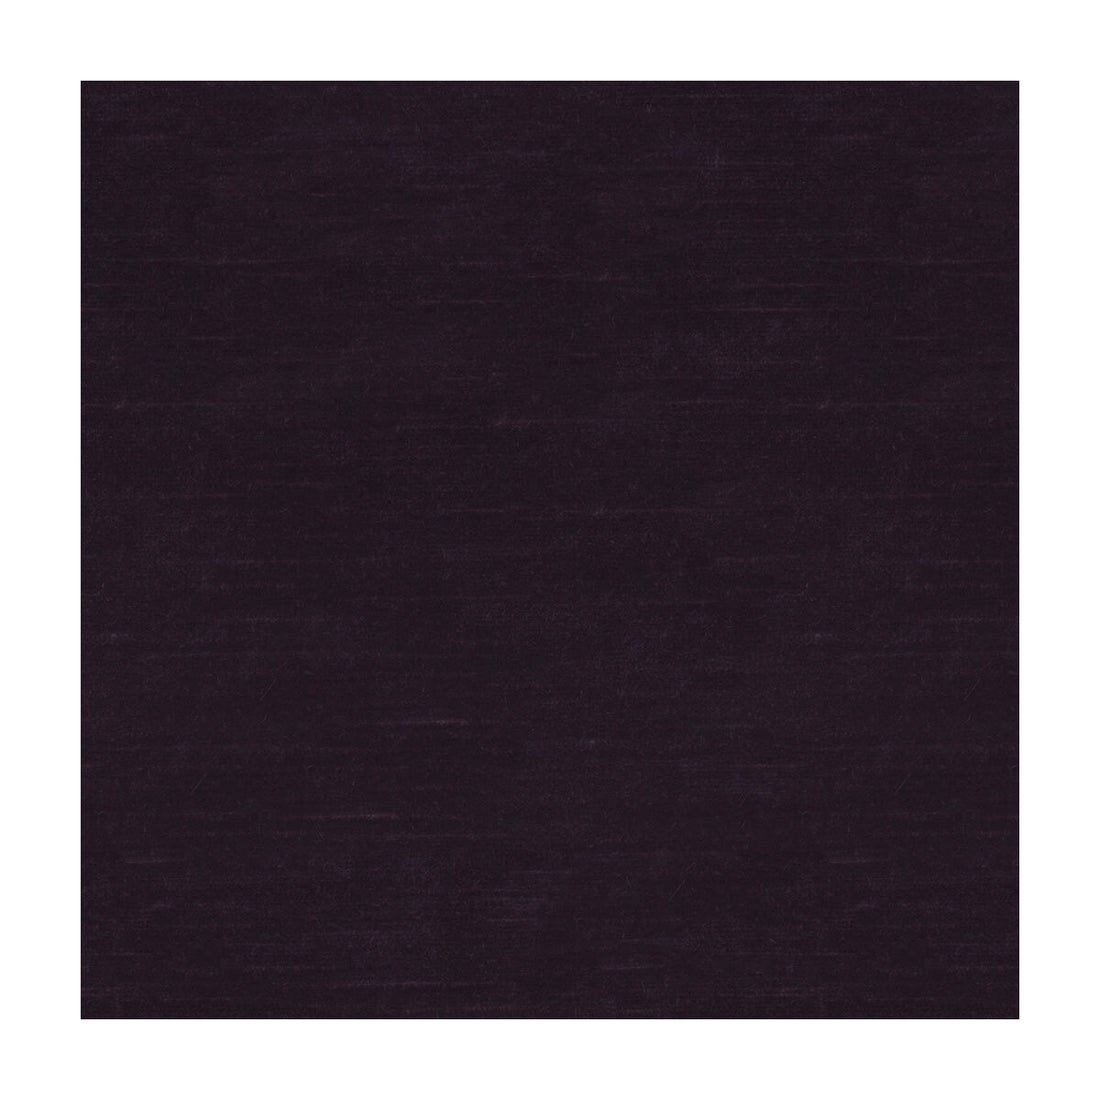 Lazare Velvet fabric in aubergine color - pattern 8016103.10.0 - by Brunschwig &amp; Fils